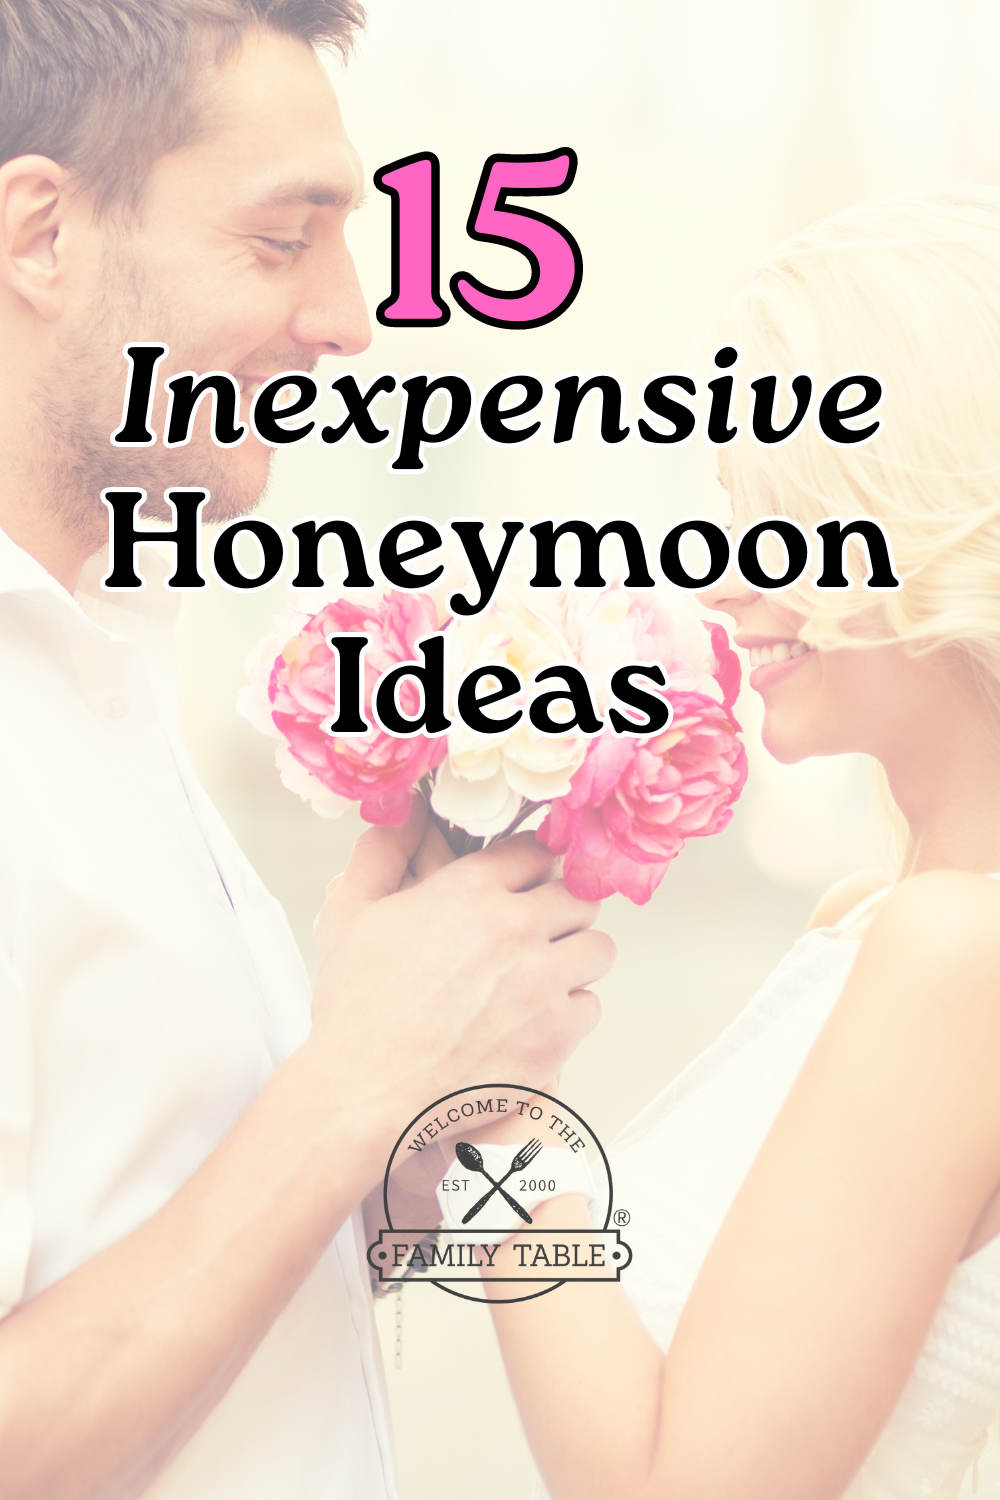 15 Inexpensive Honeymoon Ideas